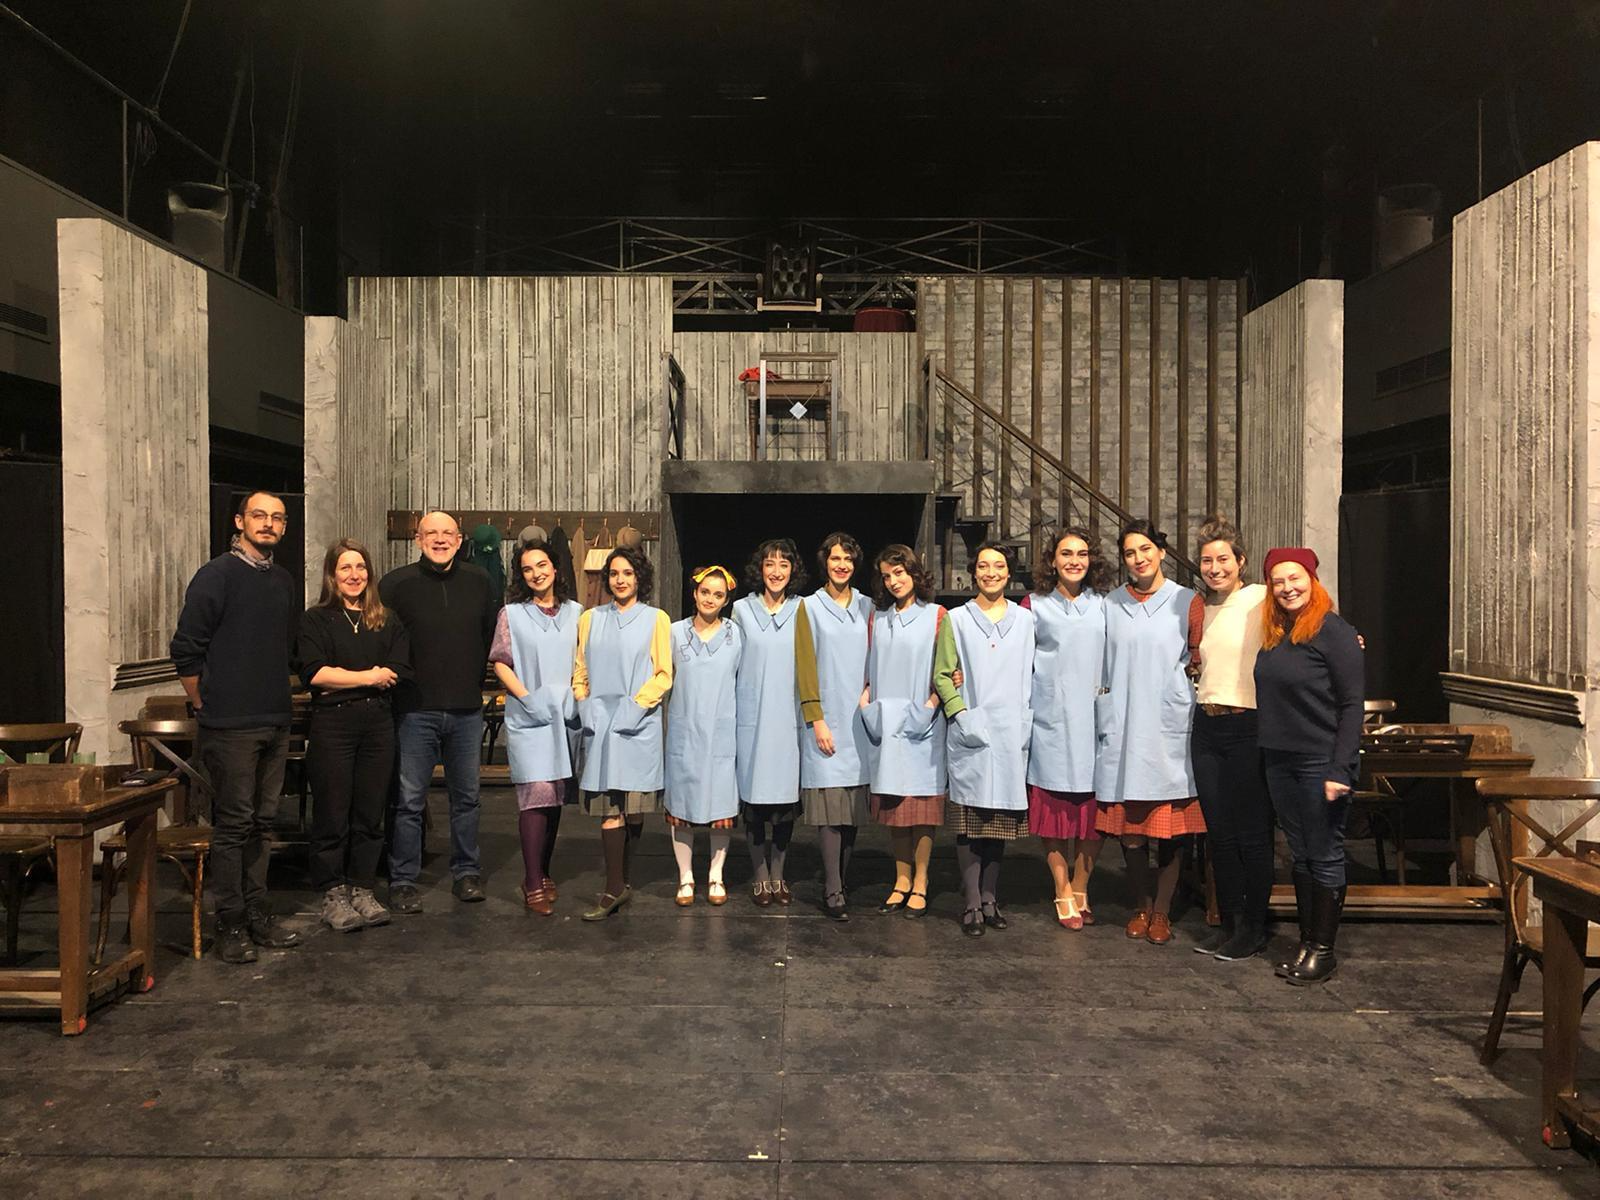 Nuclear alla Turca team filming the play Radium Girls.